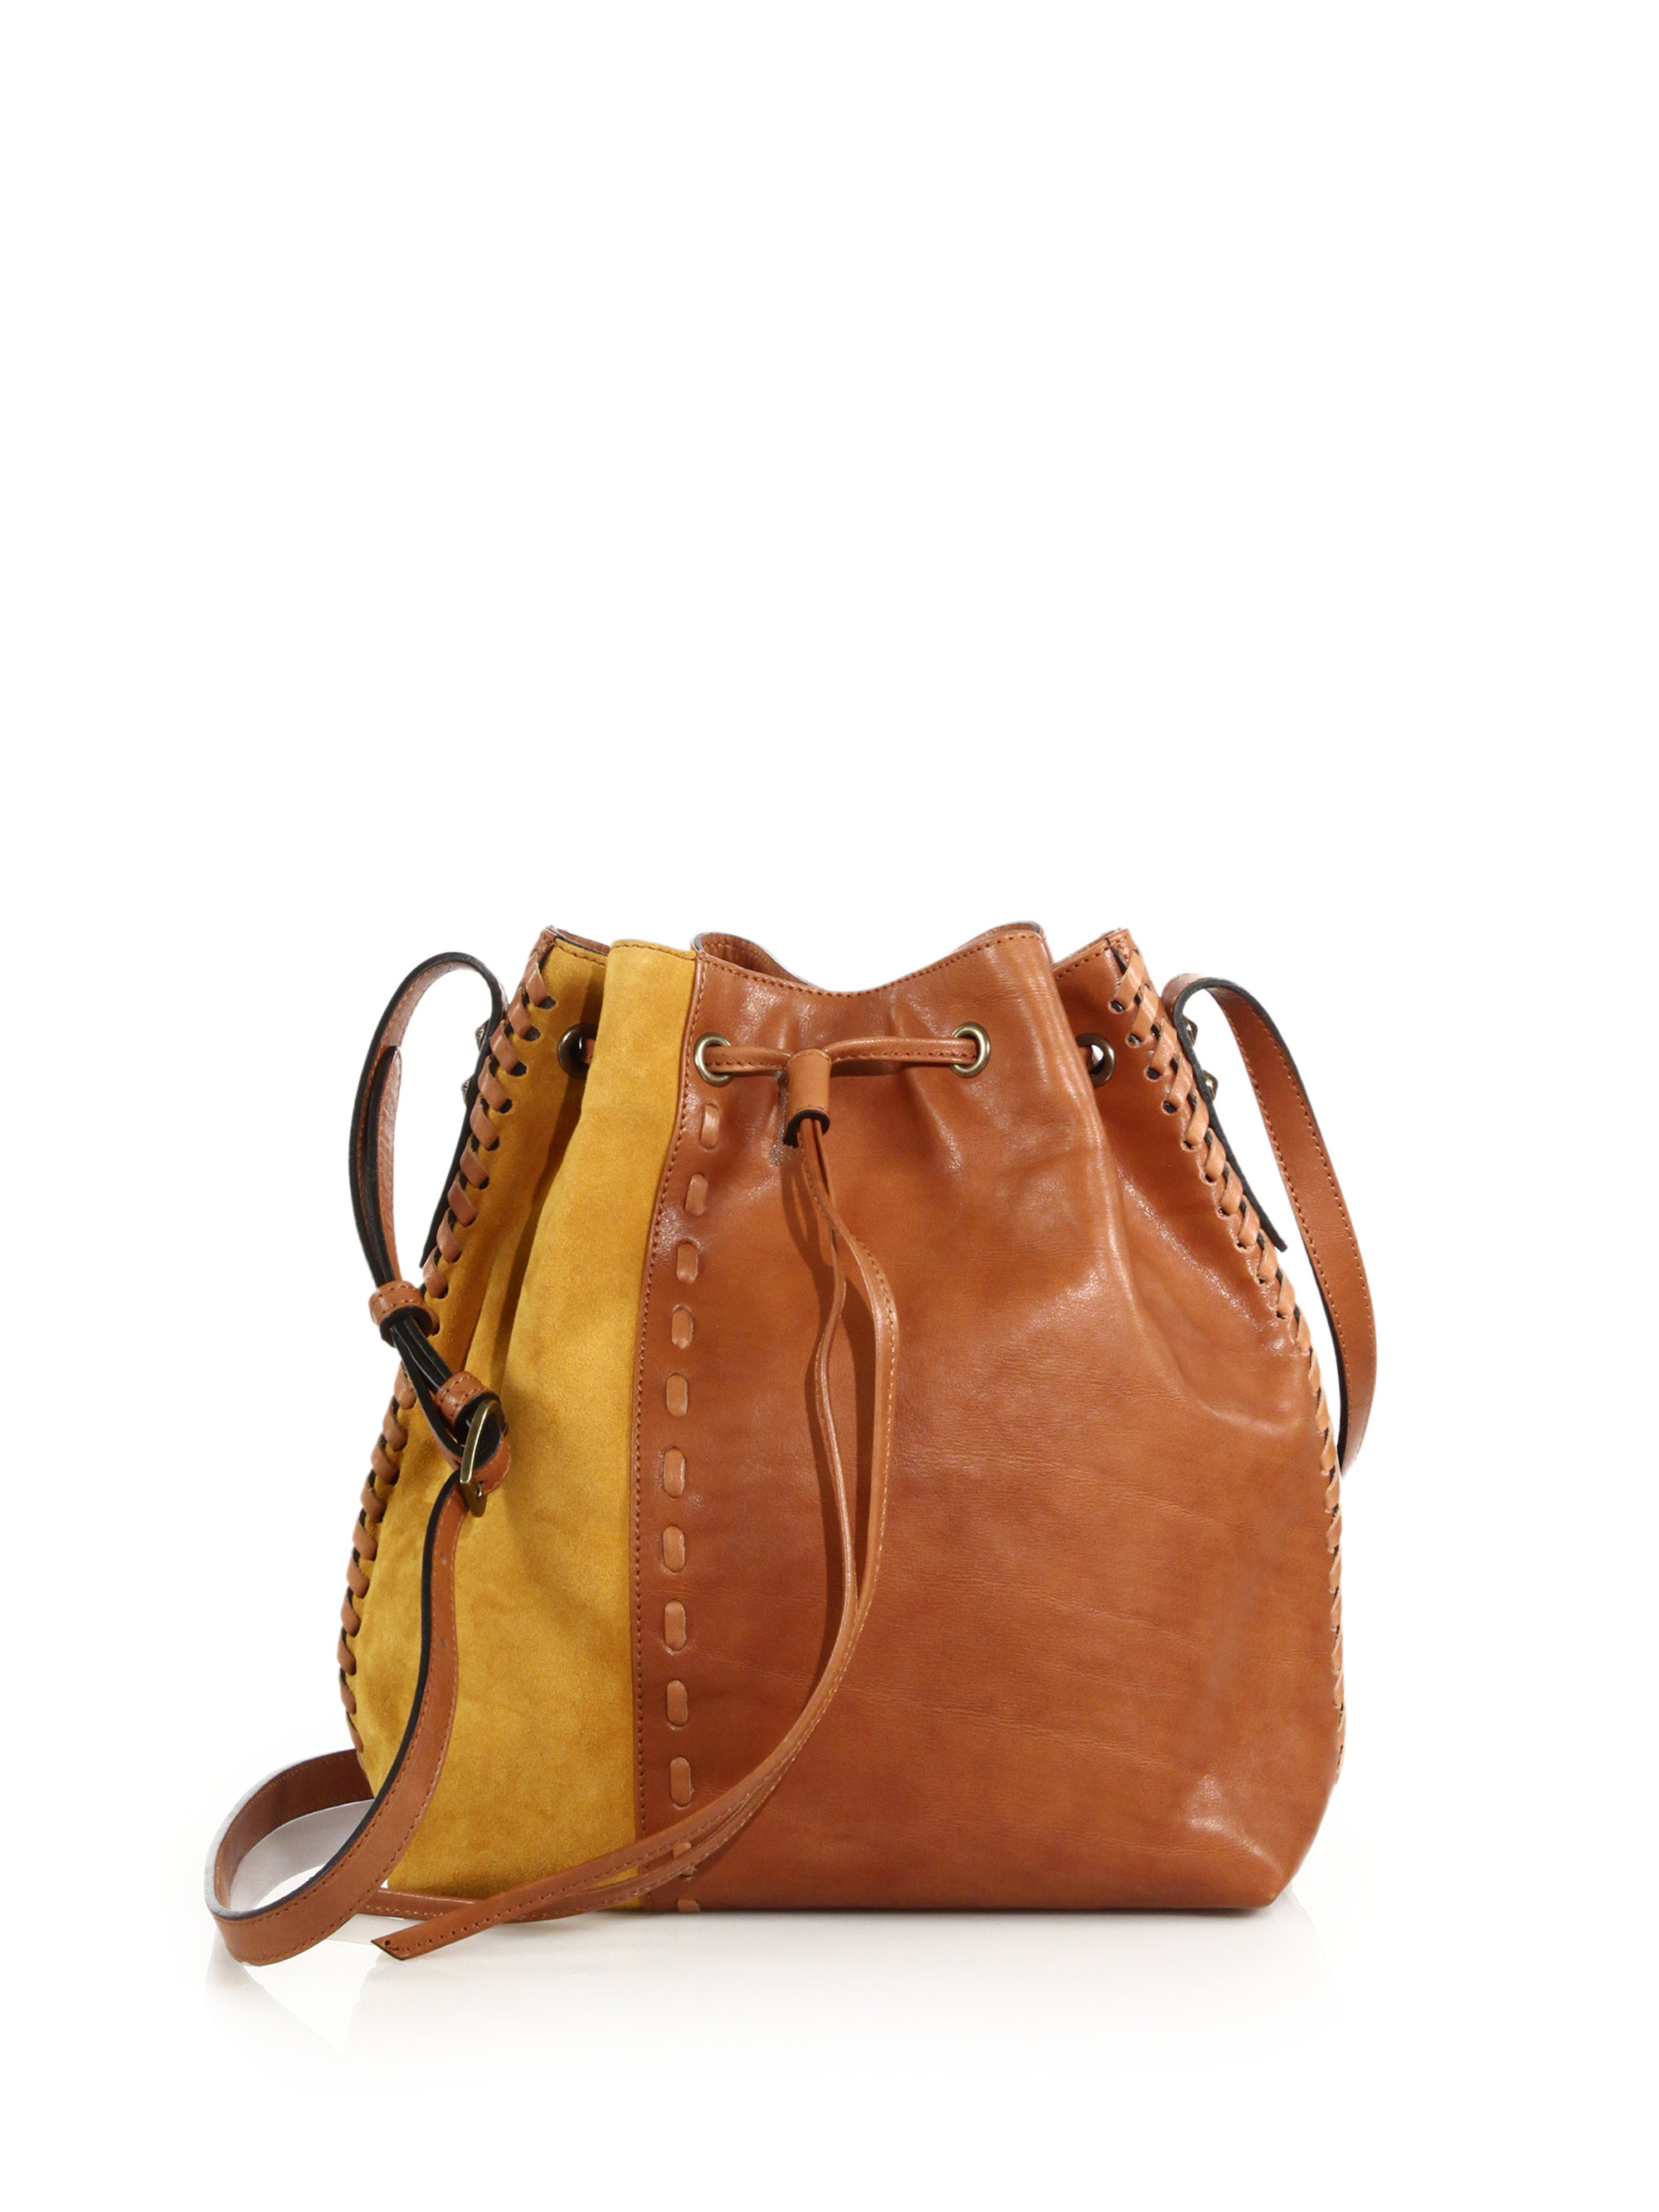 Dannijo Thalia Leather & Suede Bucket Bag in Brown | Lyst